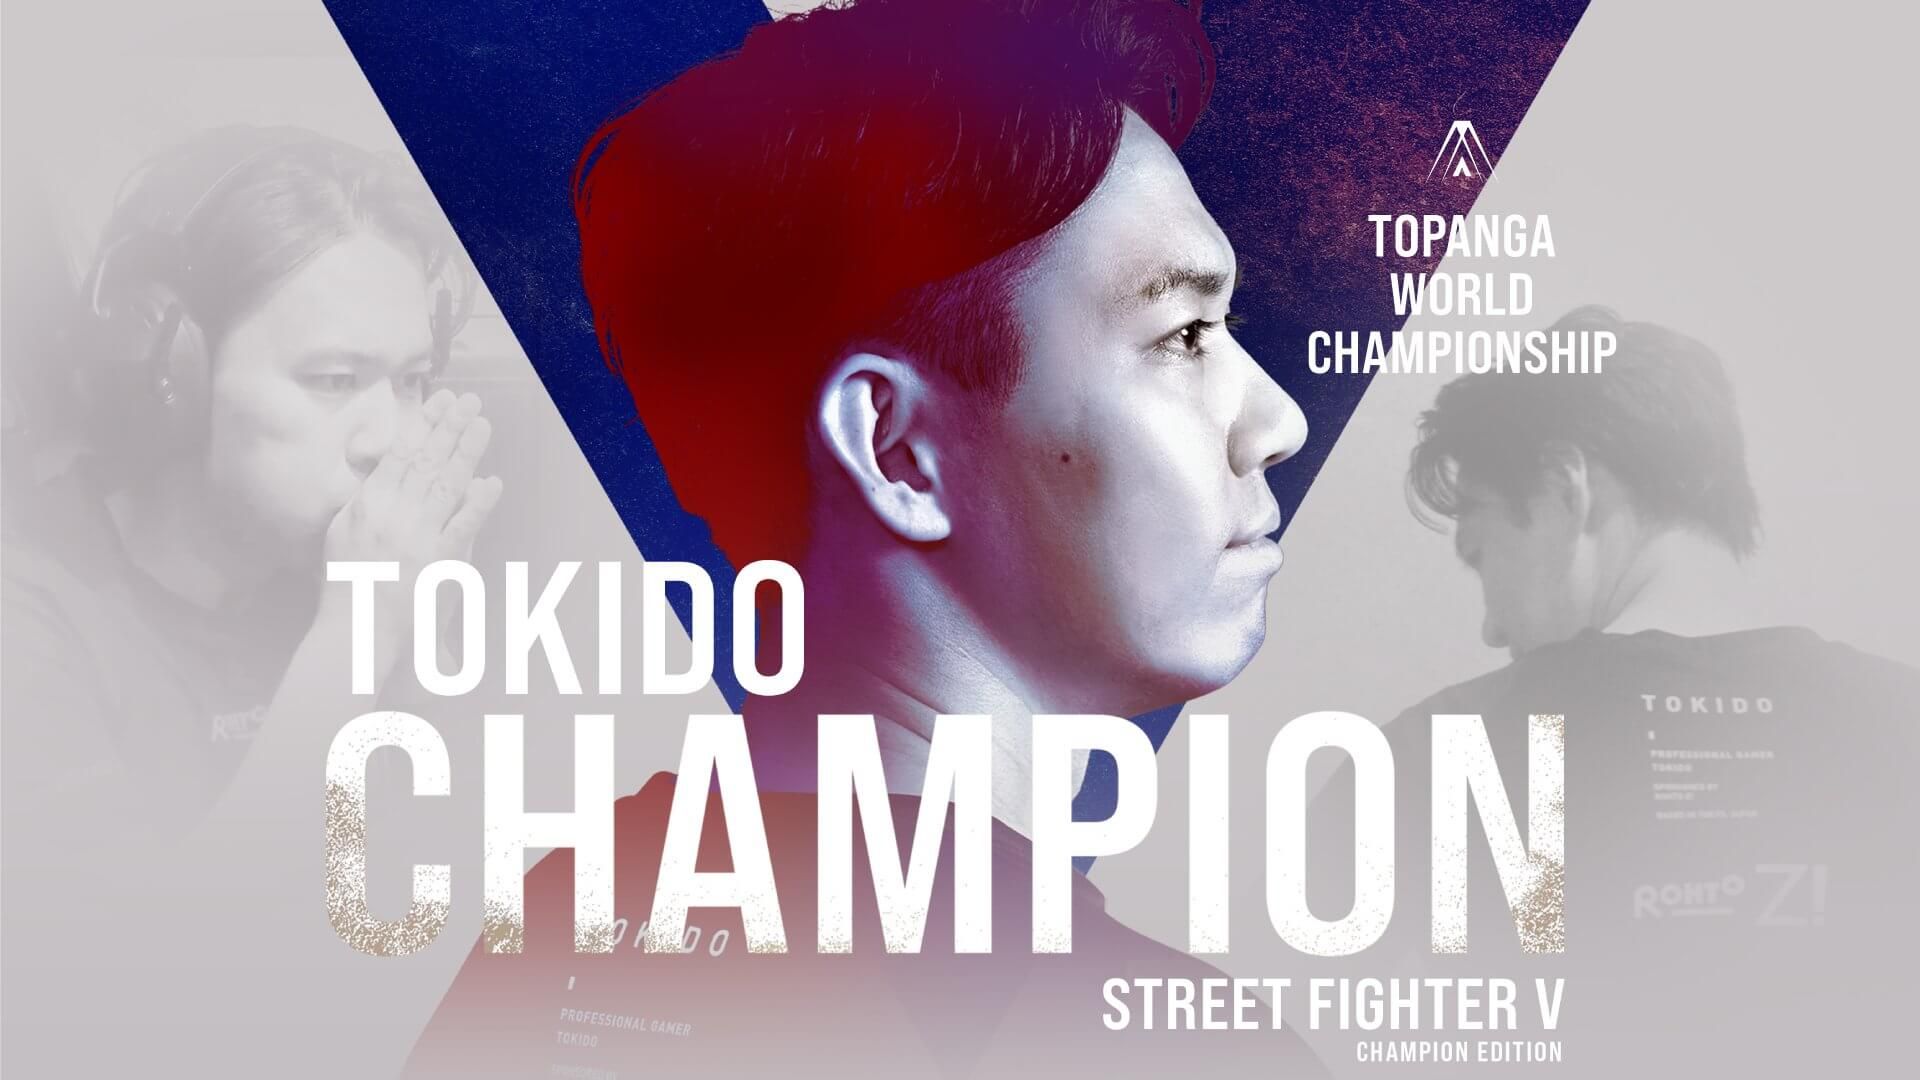 Tokido Seals His Legacy With Amazing Topanga World Championship Win